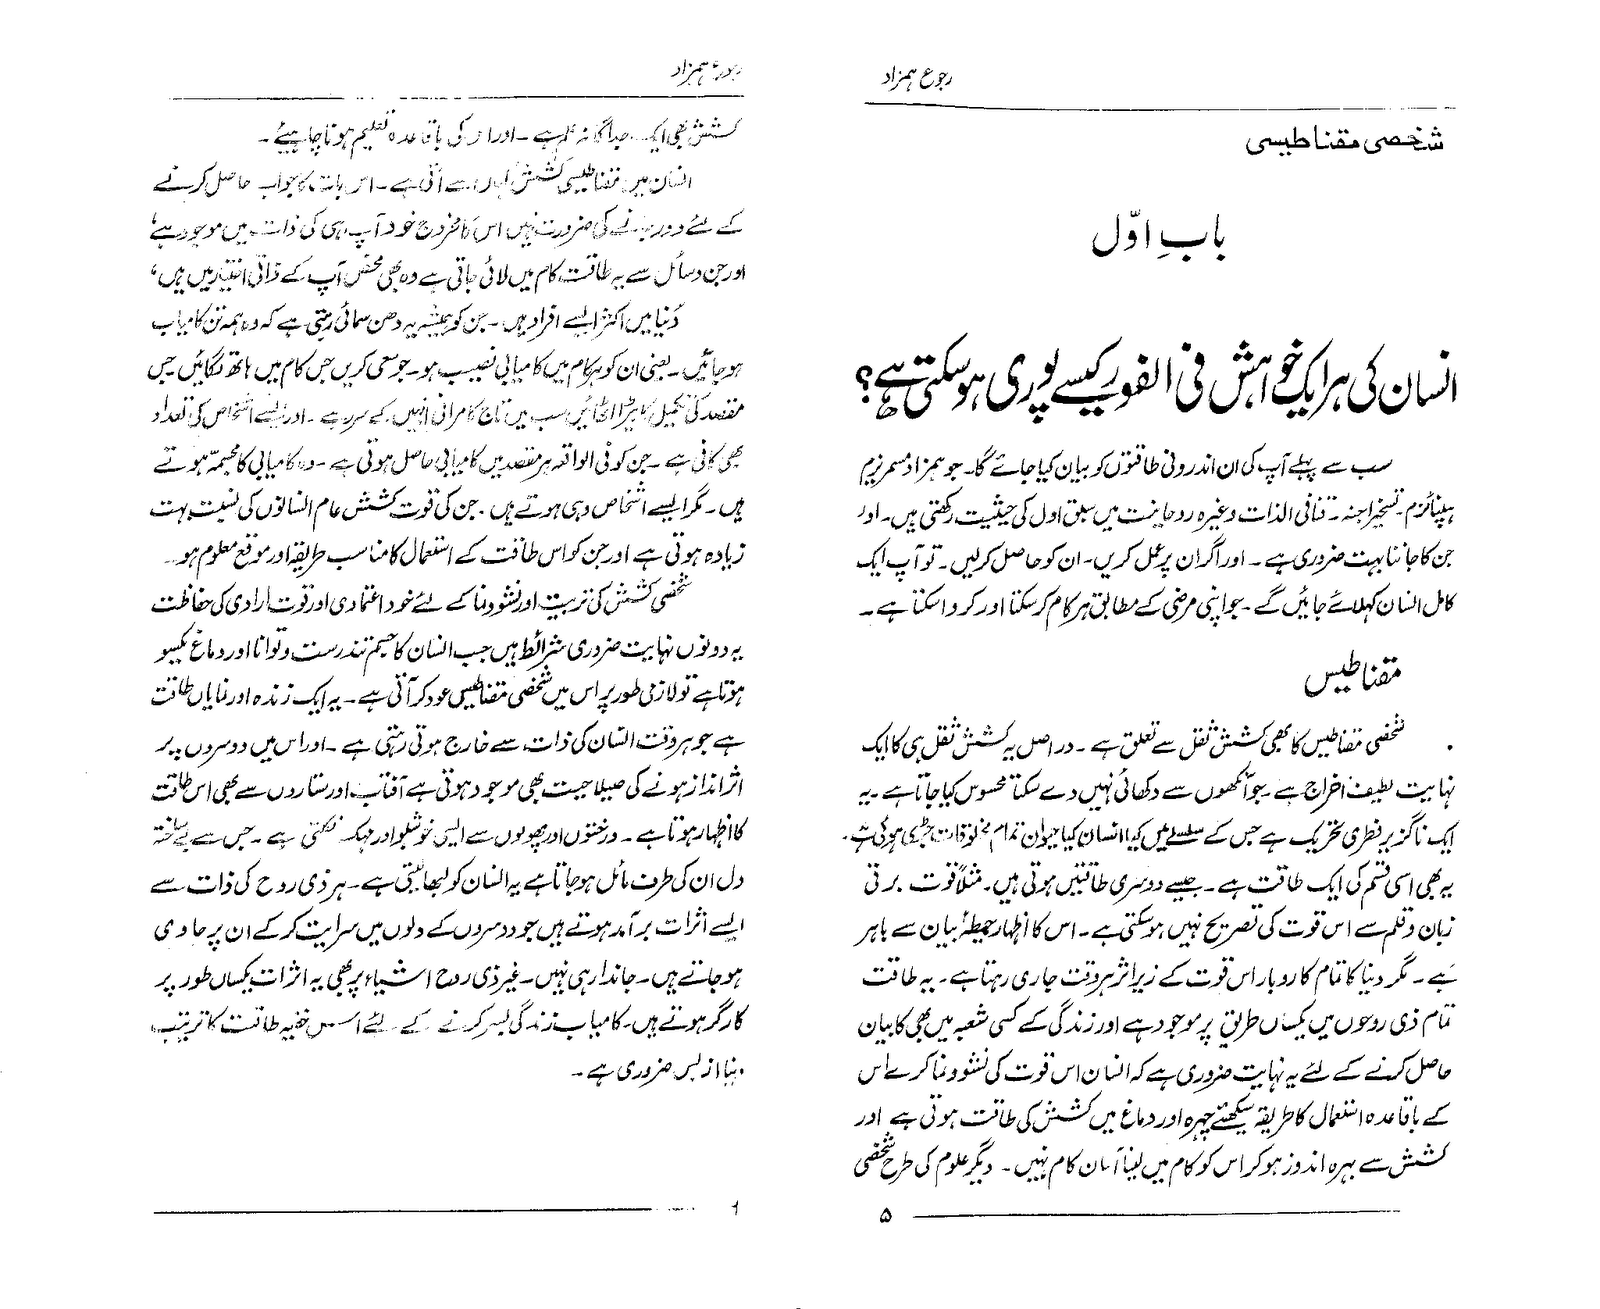 Free Download urdu novels urdu stories and Books, pdf Format. Download 